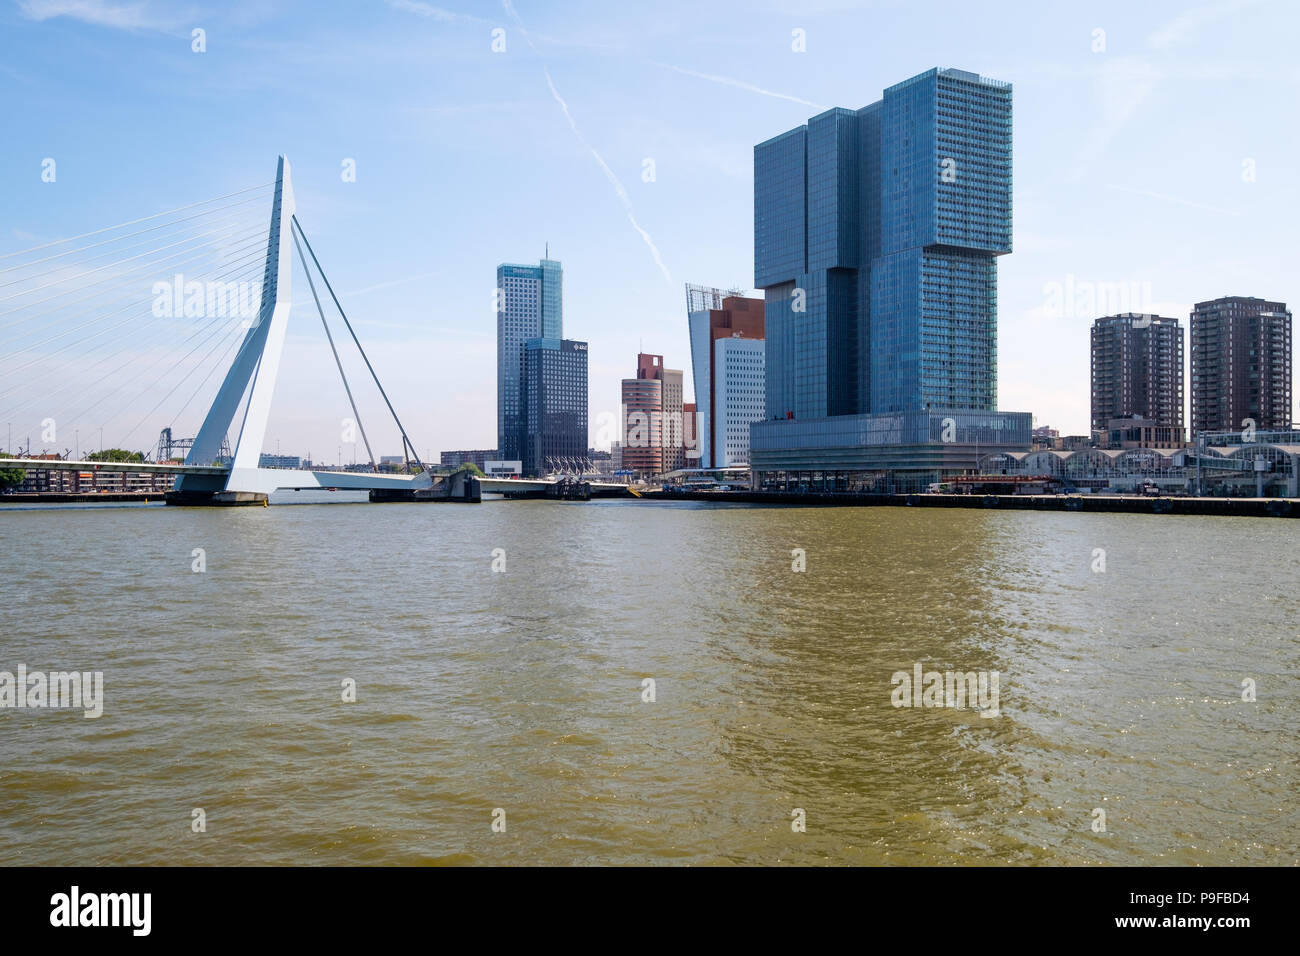 Kop van Zuid, Rotterdam, Netherlands Stock Photo